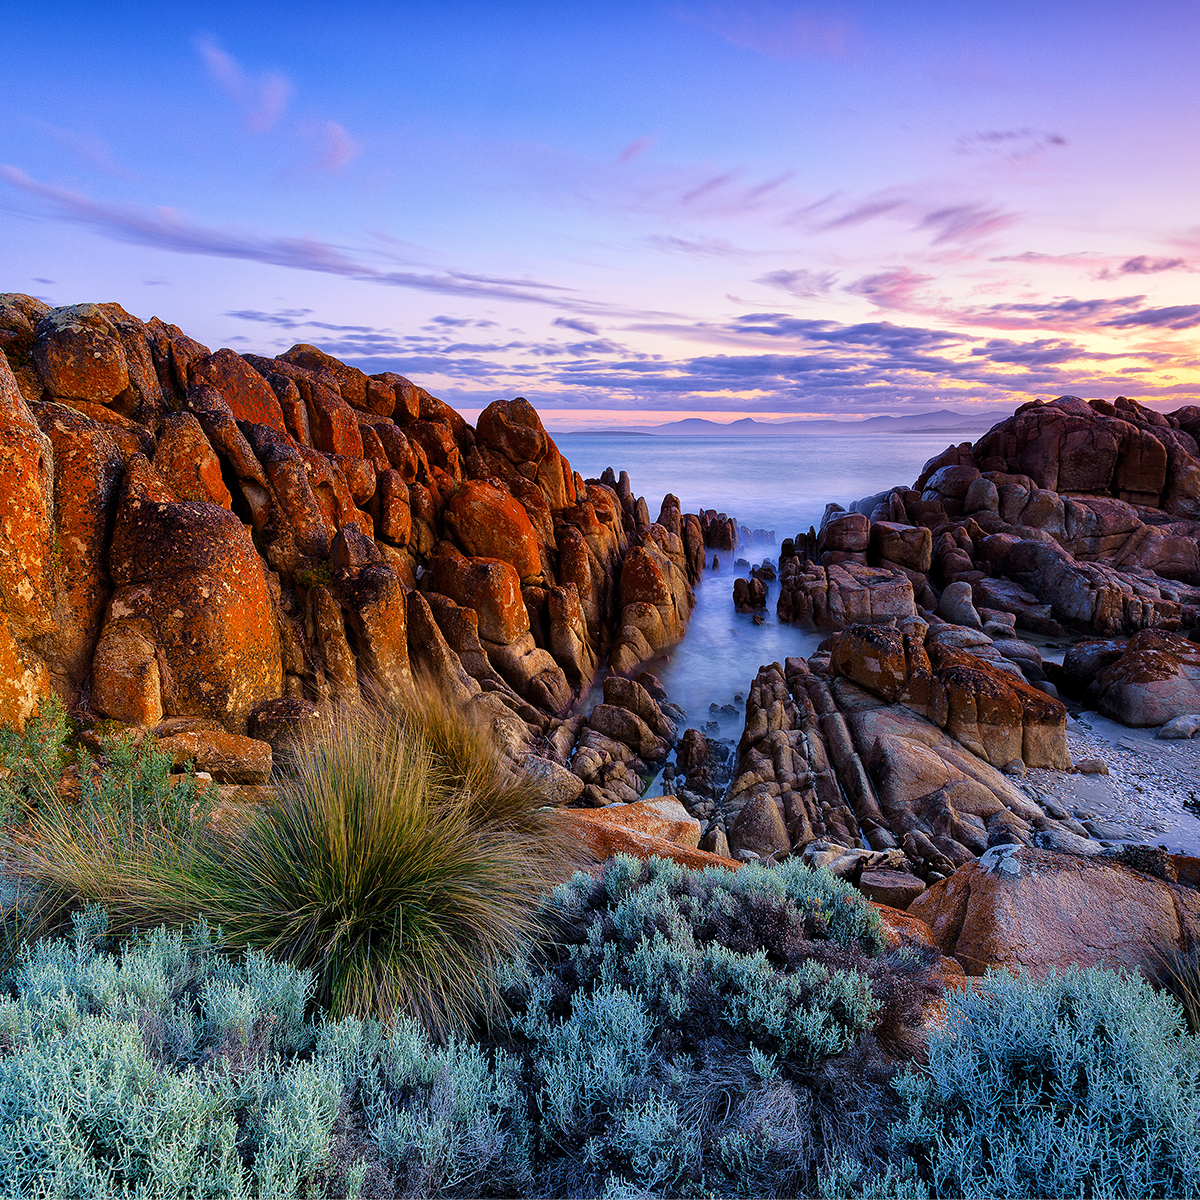 Tasmania - A destination like no other